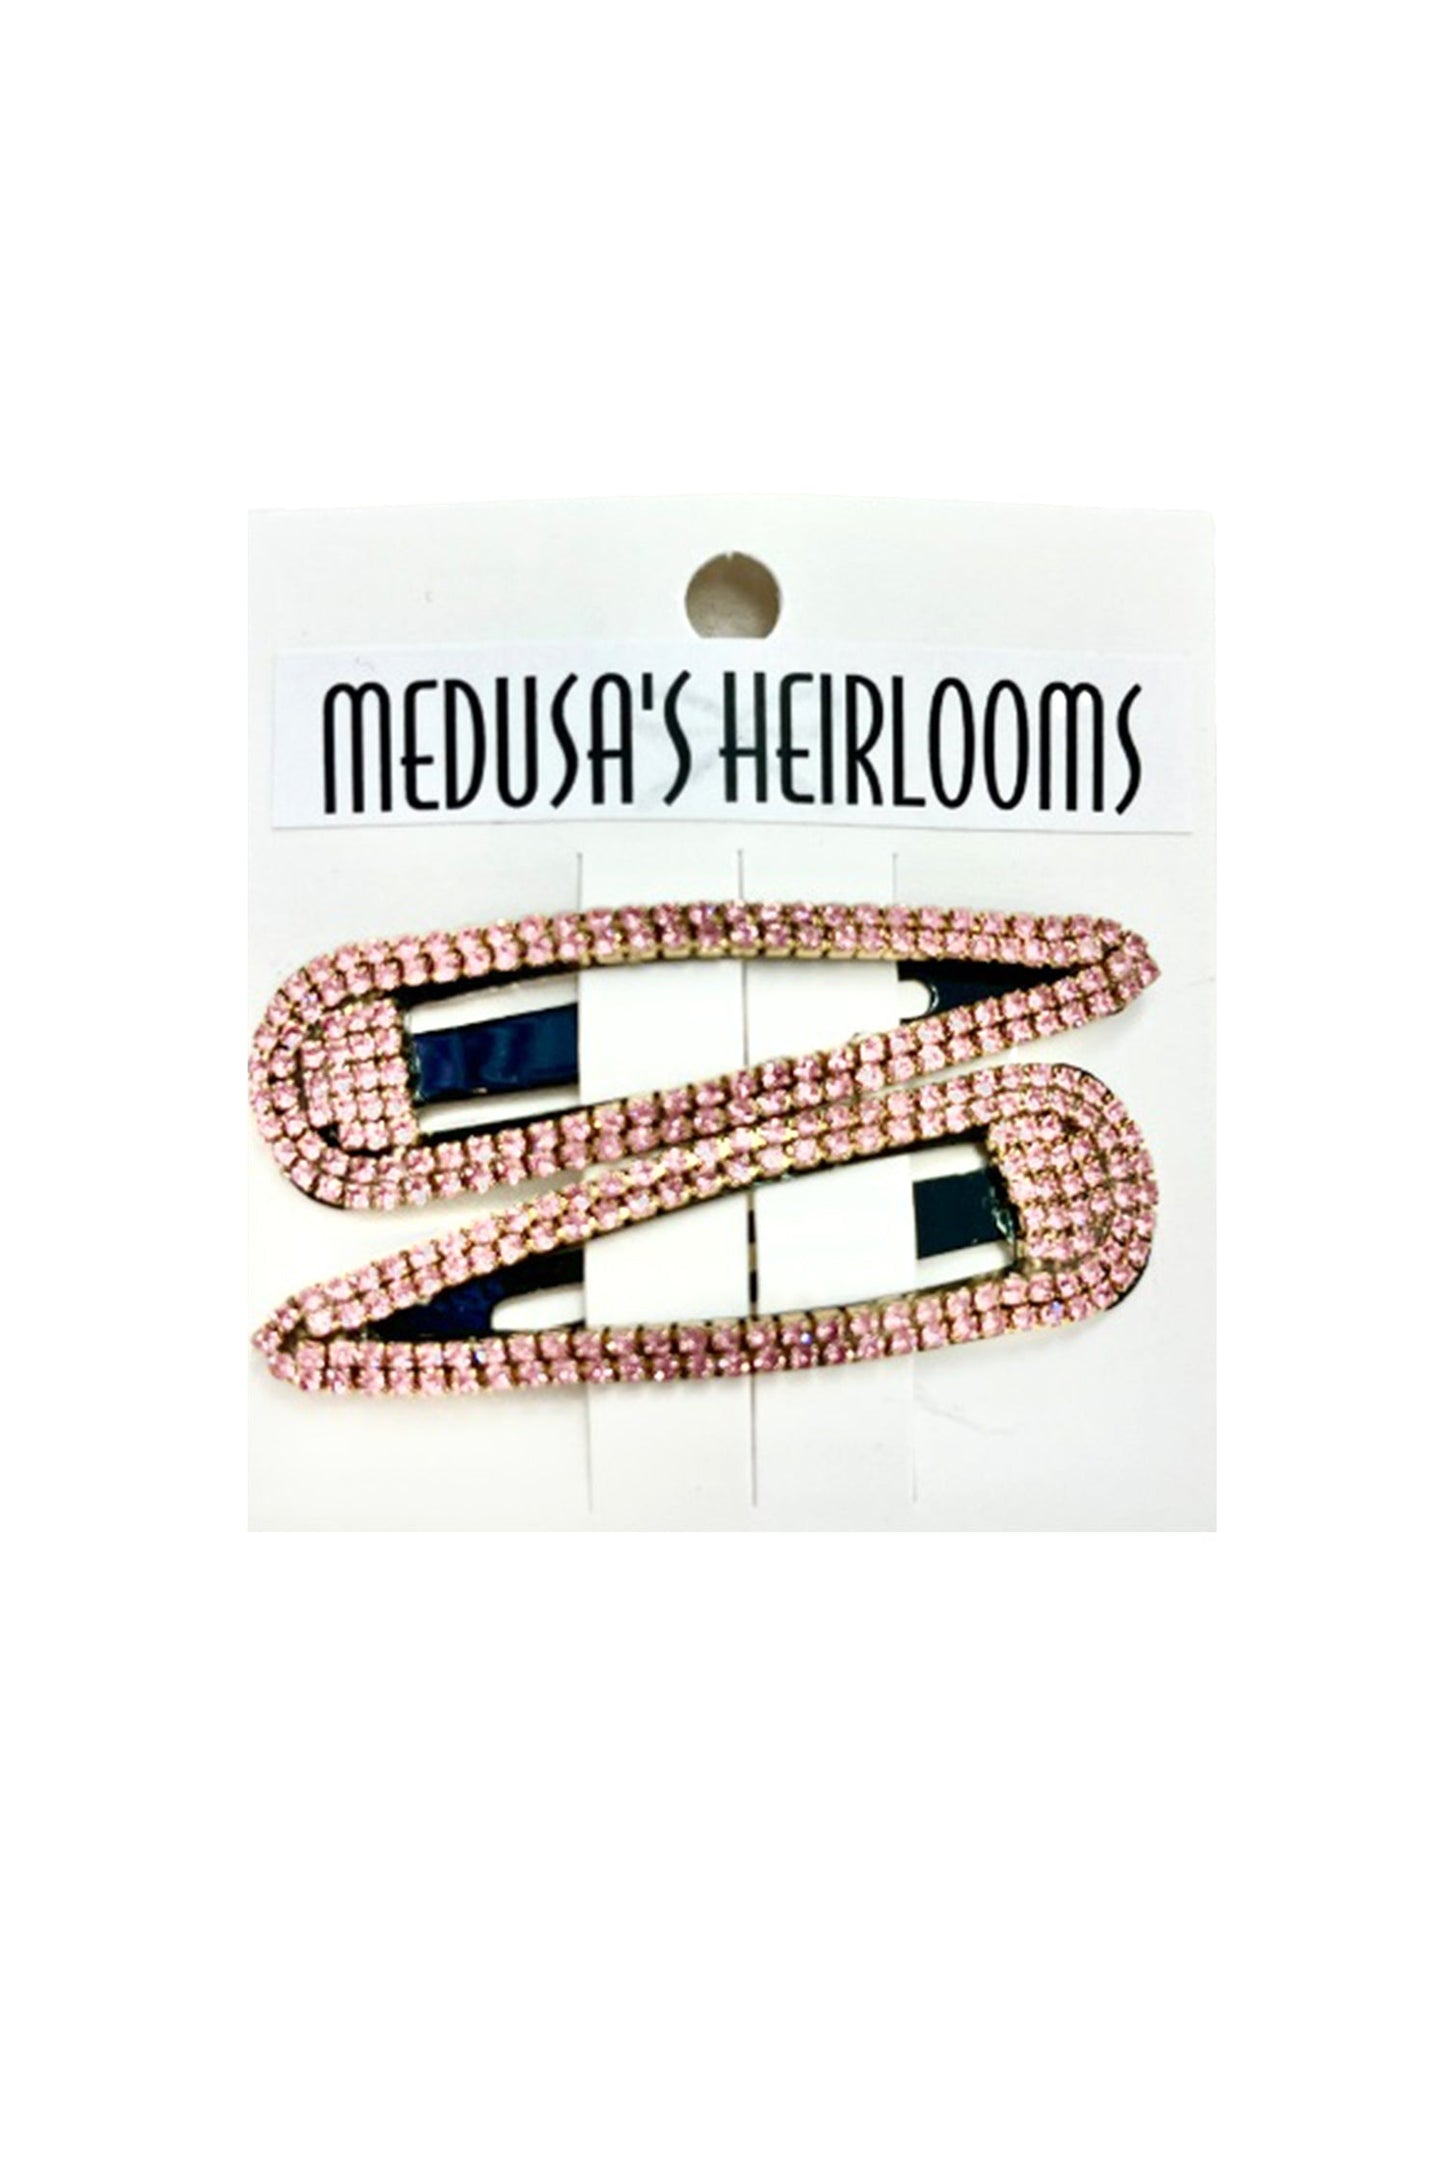 Snap Clip, 2-hollow arrowheads shape, rose pink rhinestones edges, on Medusa’s Heirlooms display